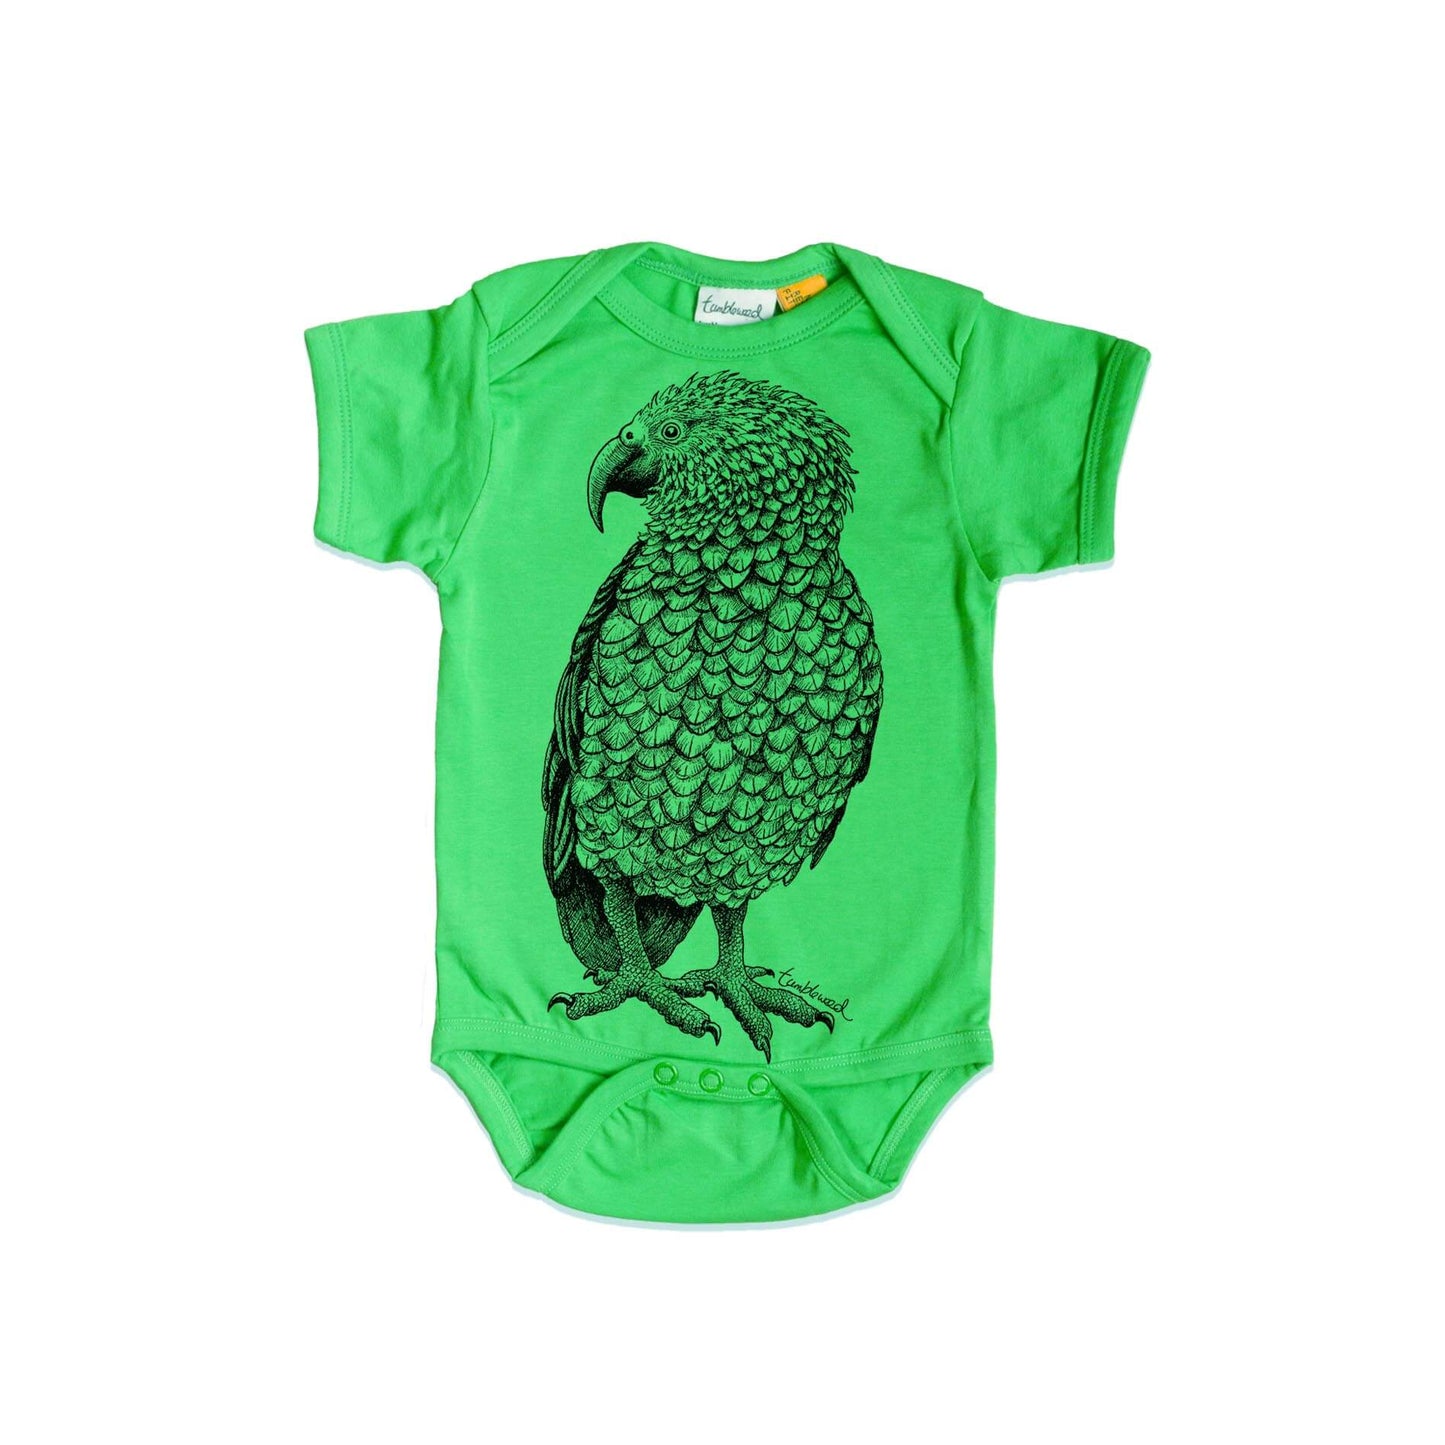 Short sleeved, green, organic cotton, baby onesie featuring a screen printed Kea design.